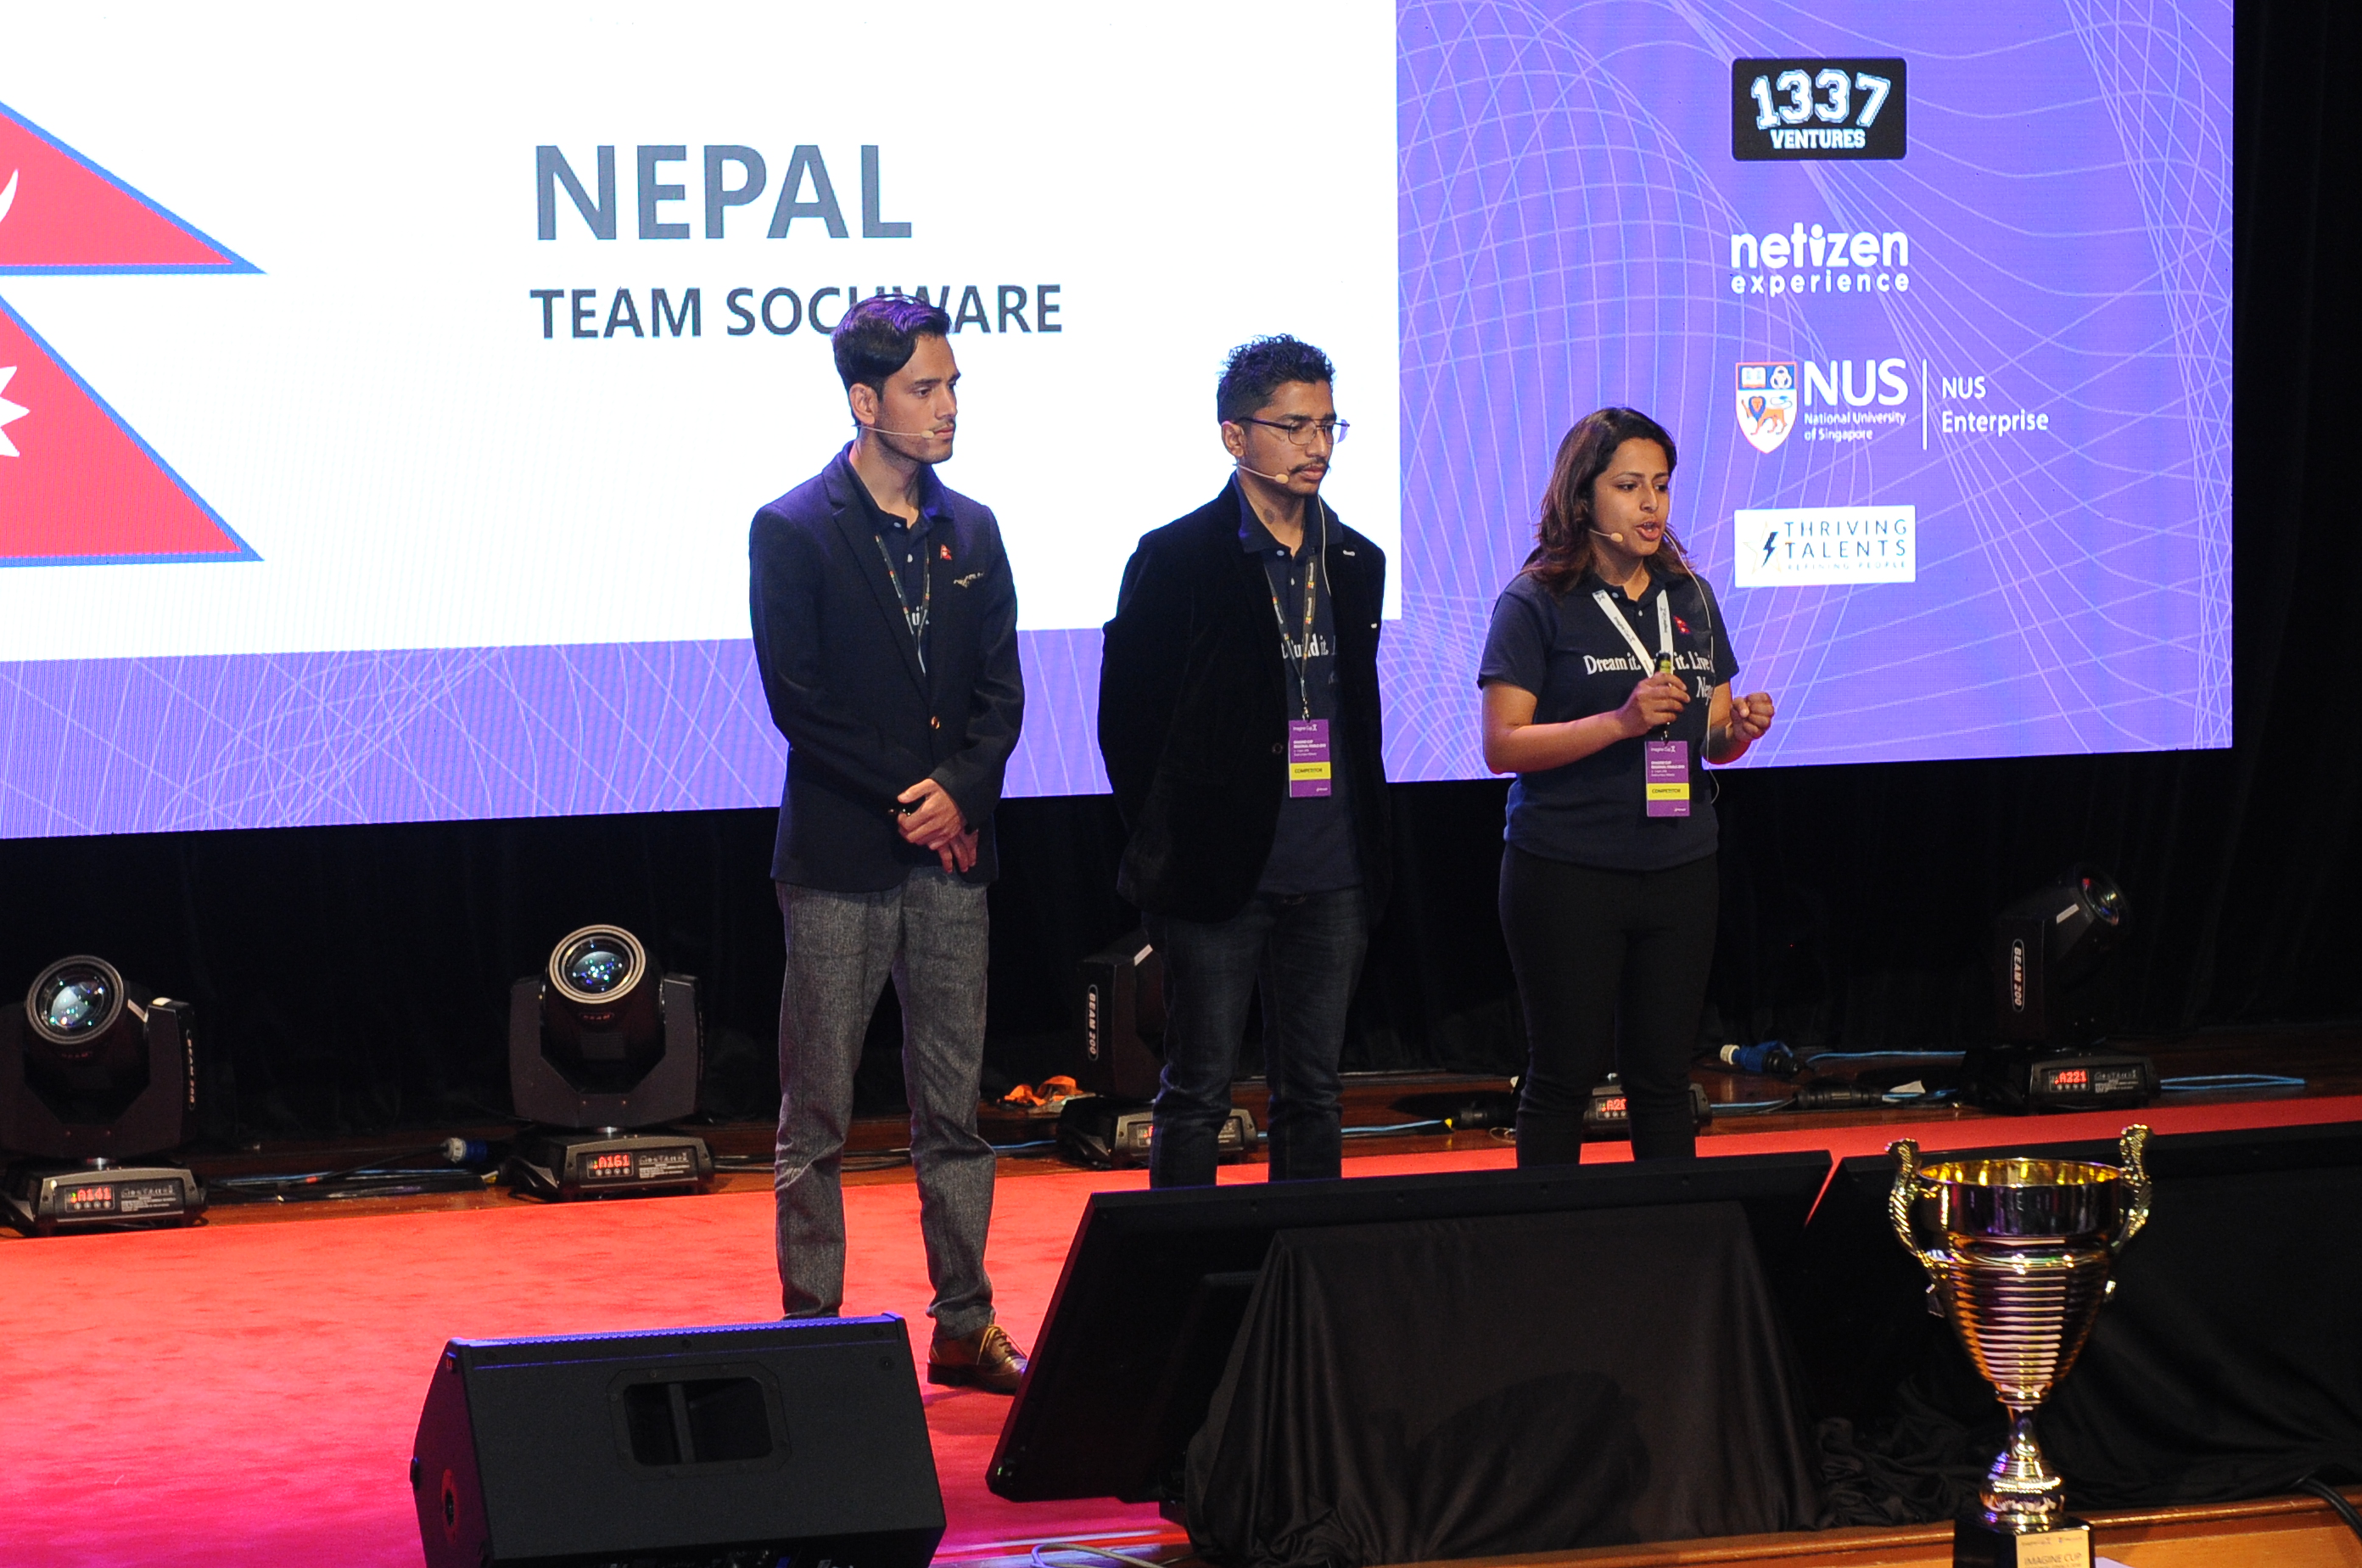 Team SochWare - Nepal